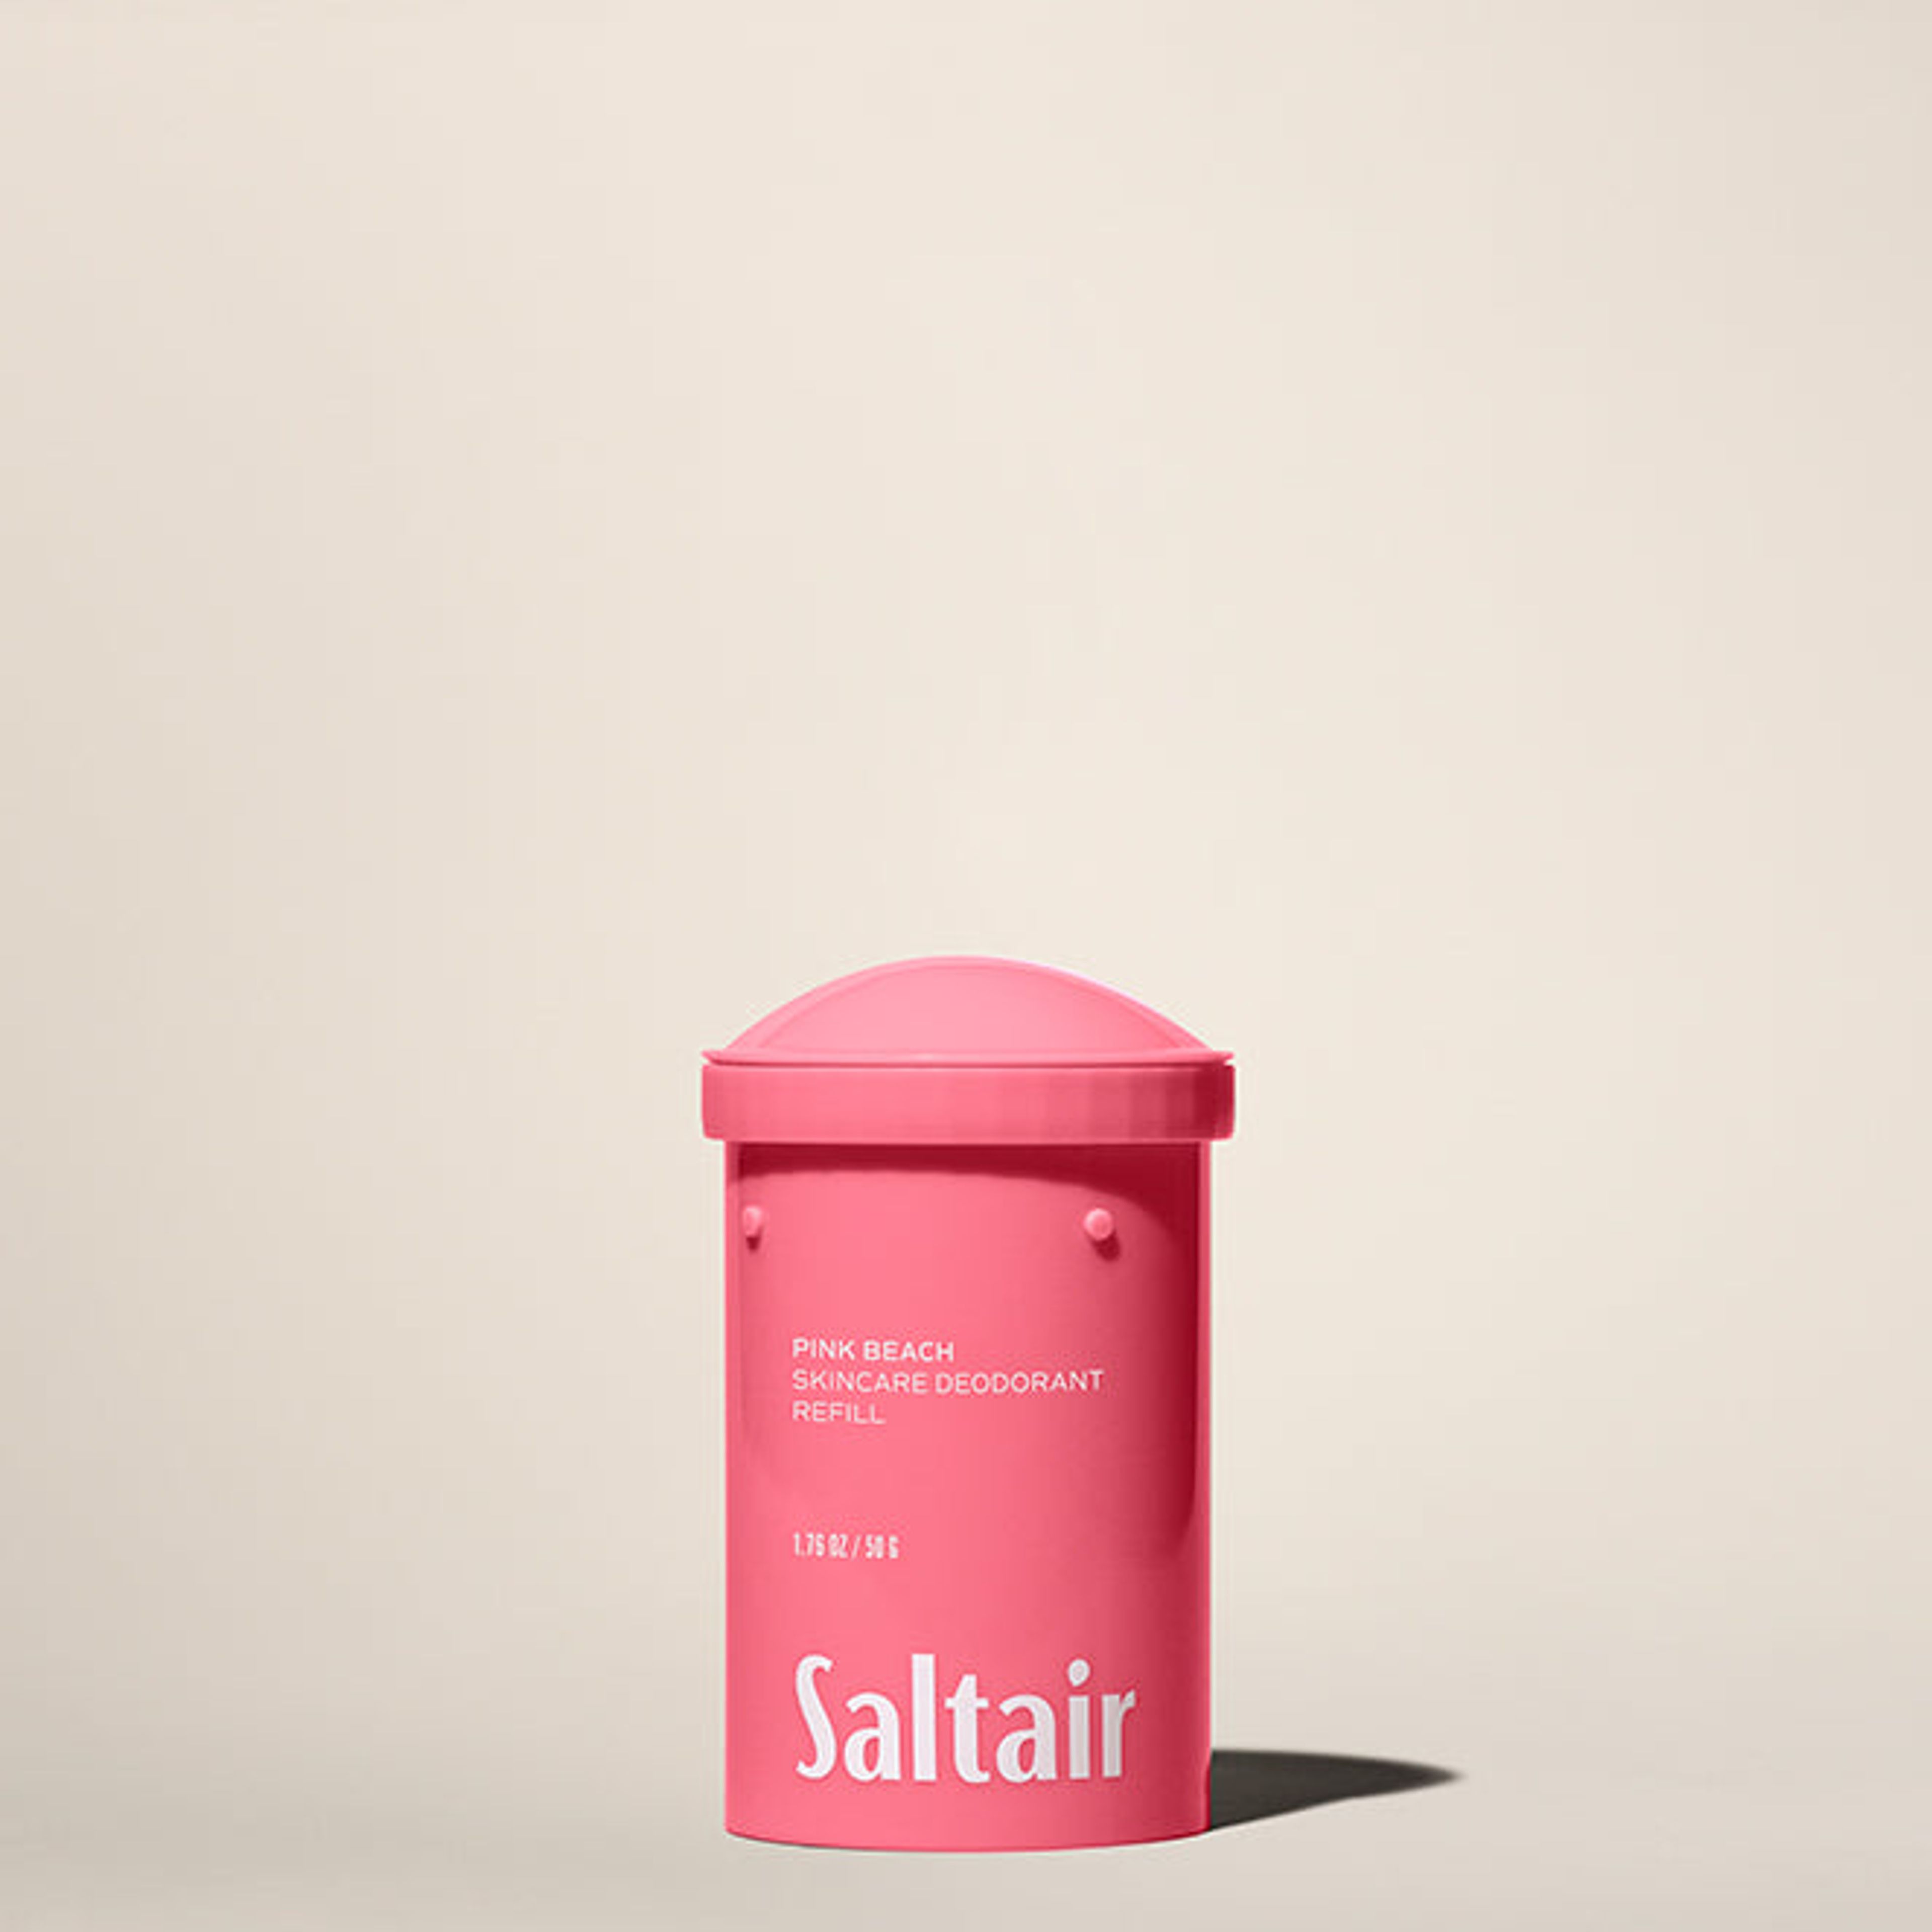 Pink Beach - Skincare Deodorant